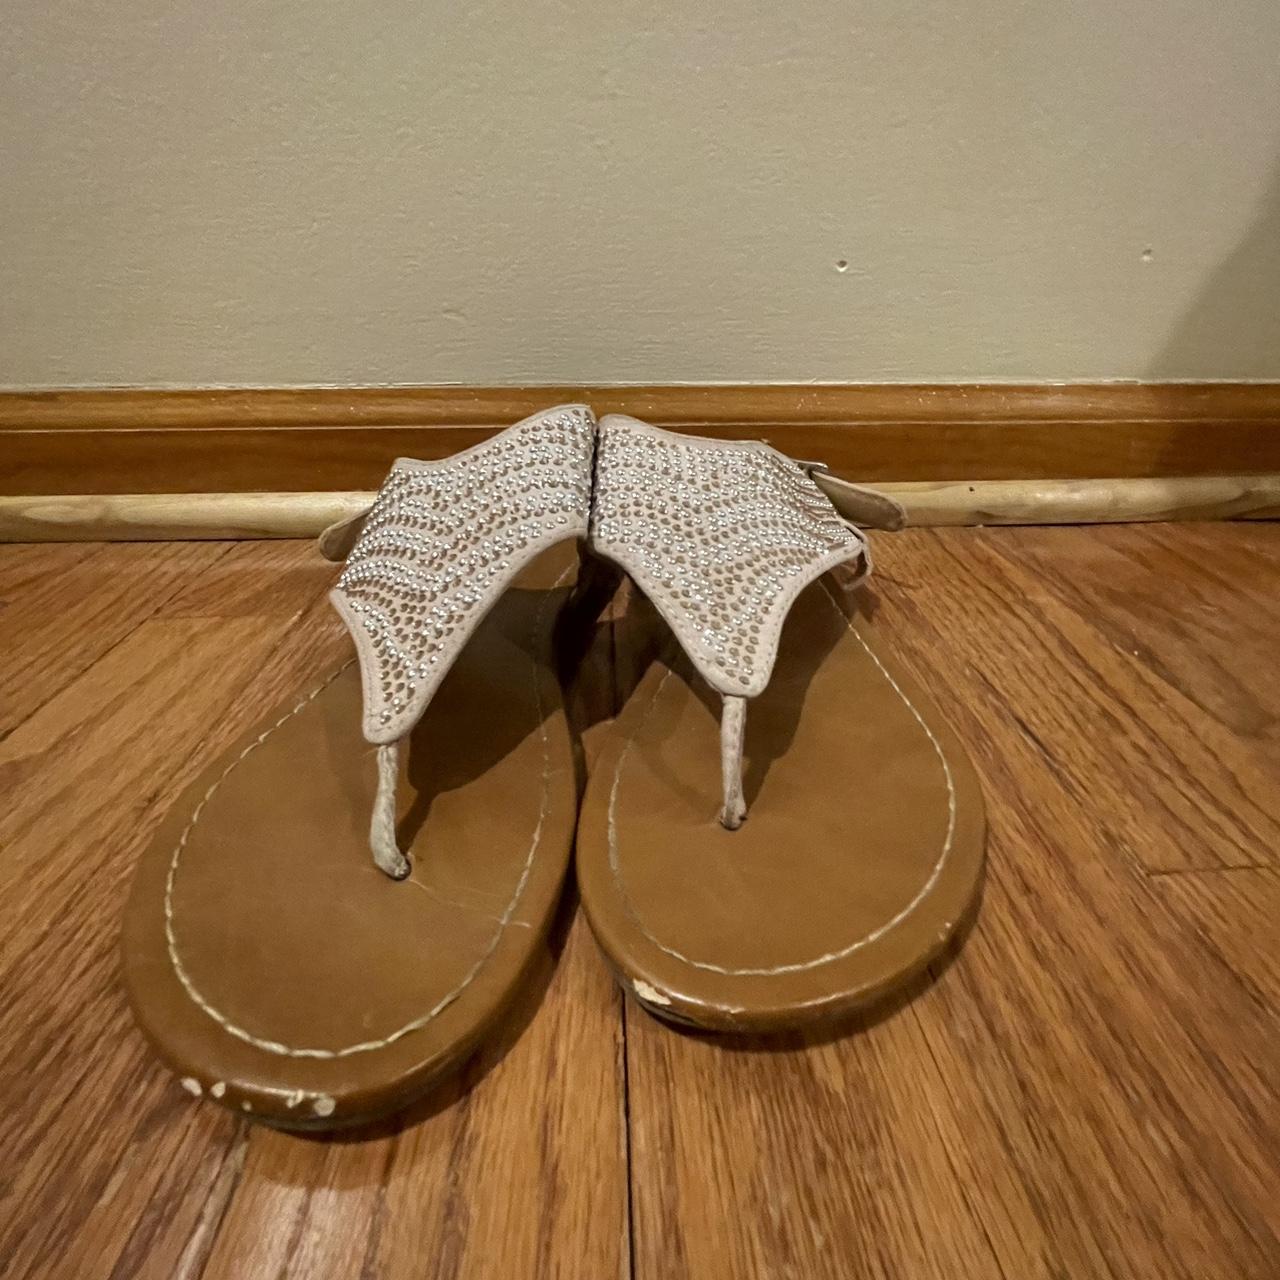 Sandals Flip Flops By Target Size: 10